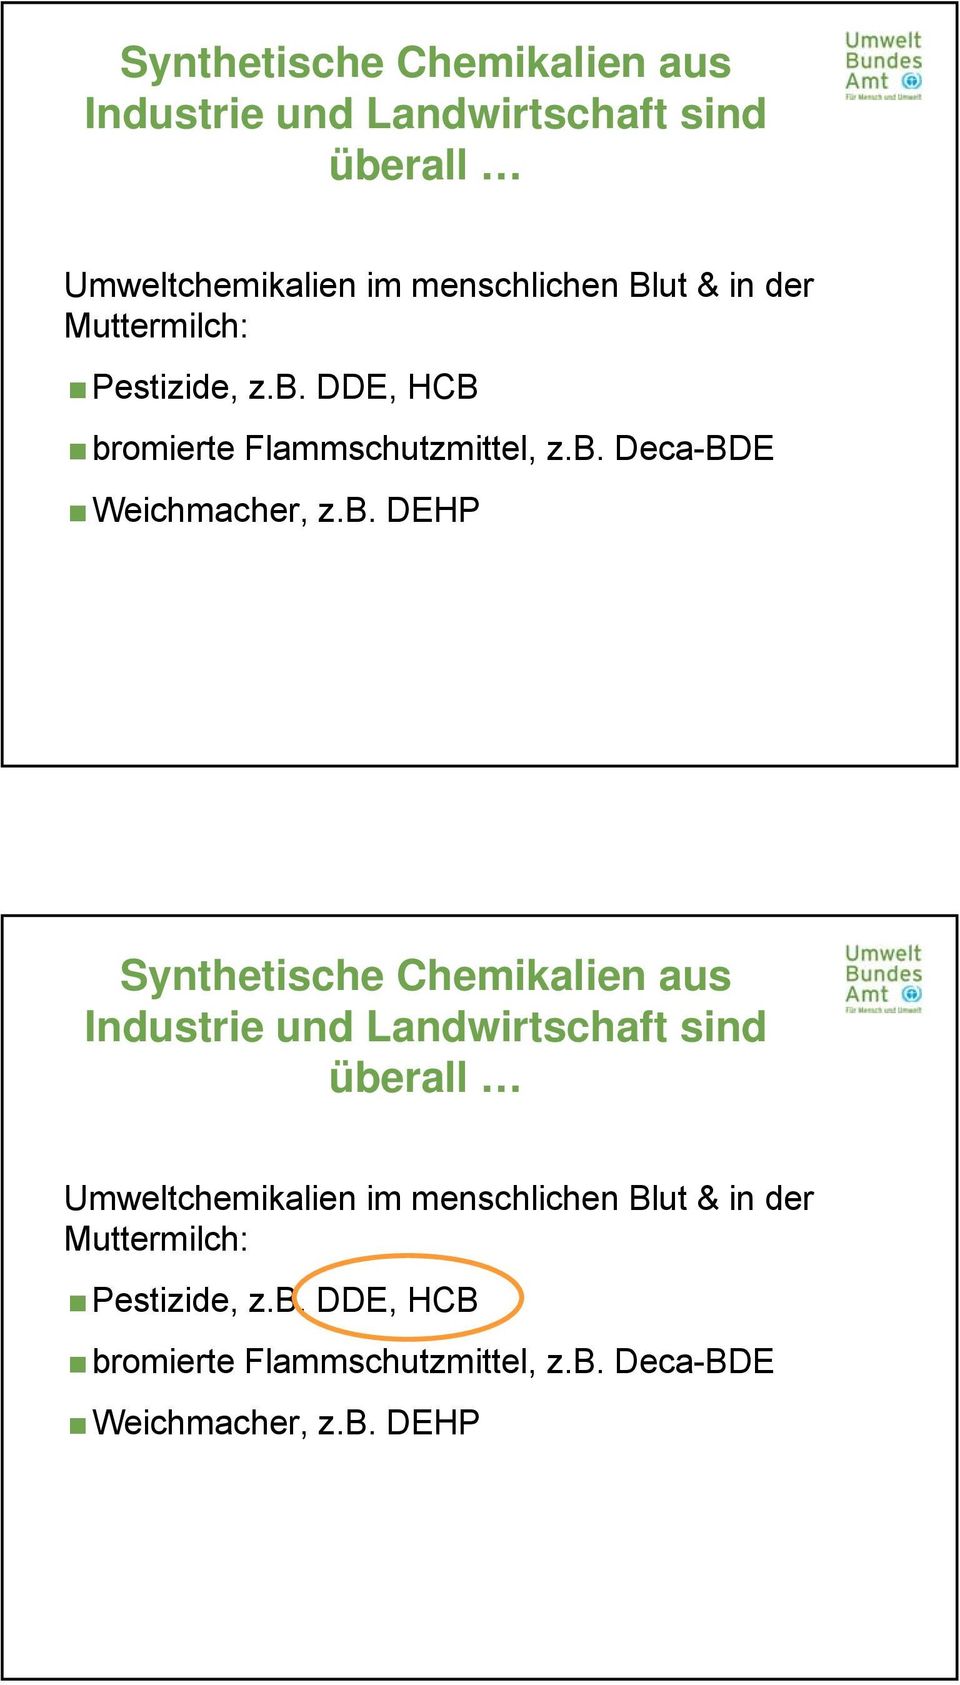 b. DDE, HCB bromierte Flammschutzmittel, z.b. Deca-BDE Weichmacher, z.b. DEHP